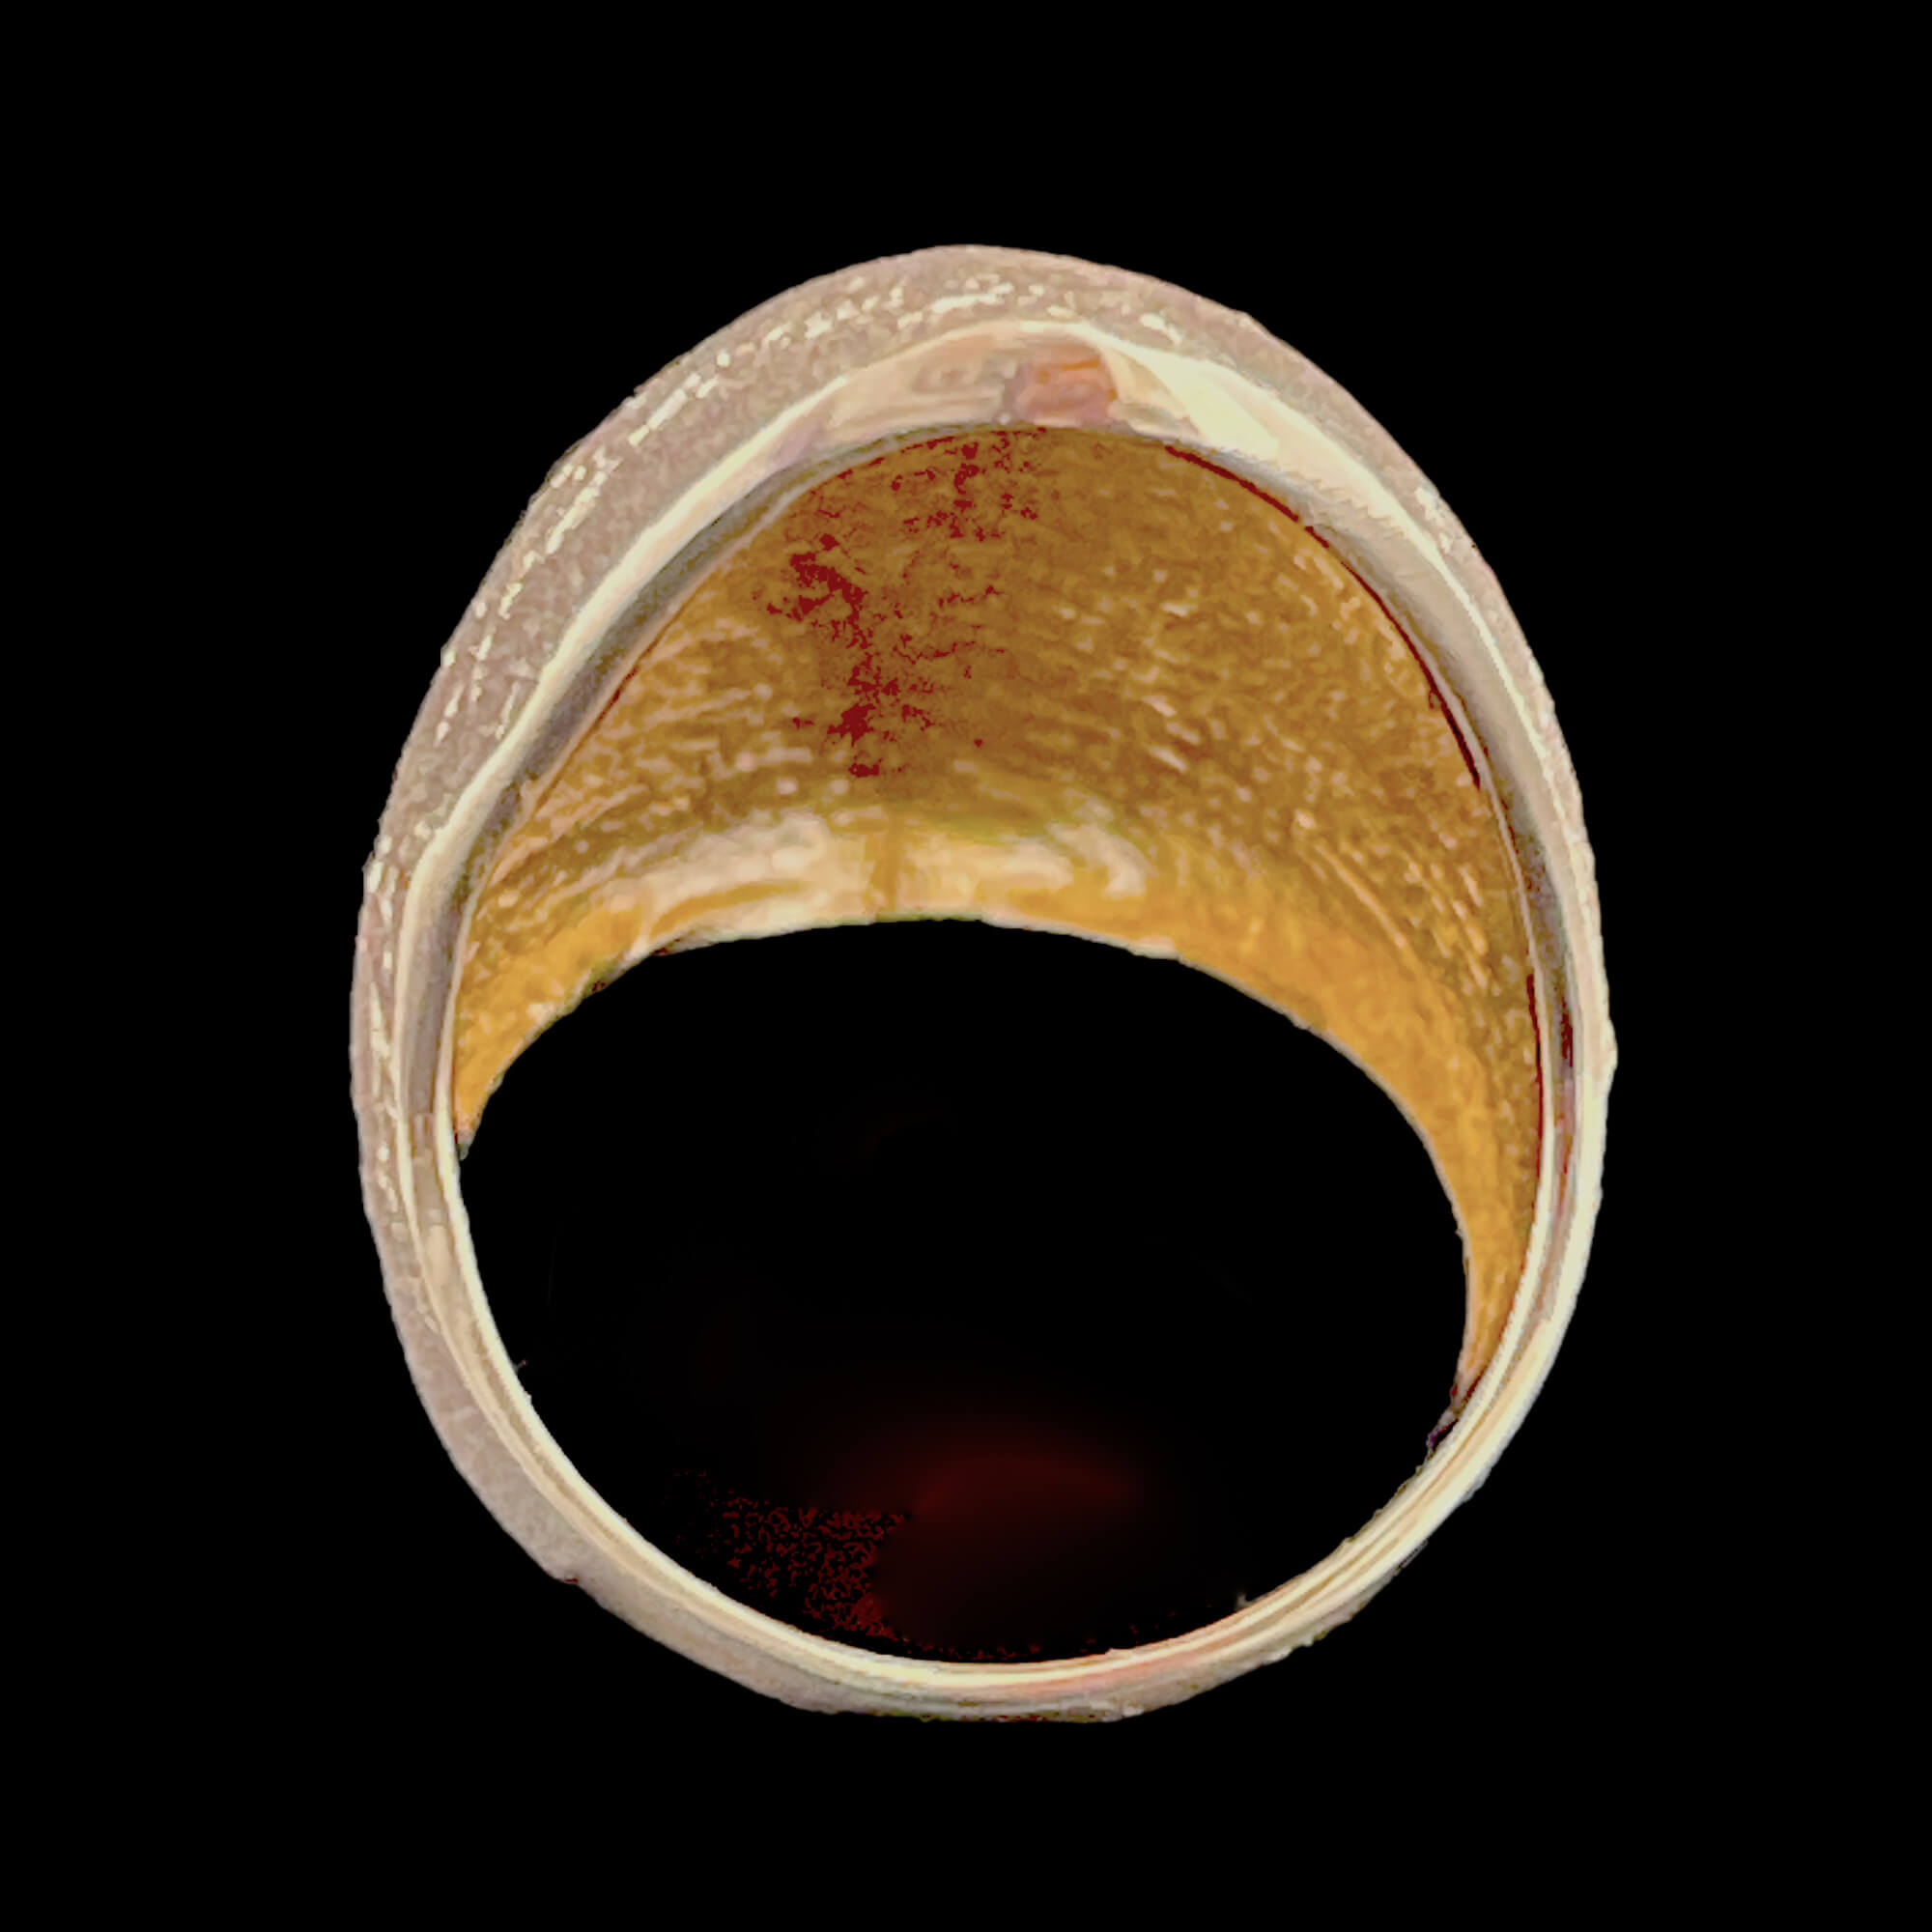 Gilt and polished elongated ring